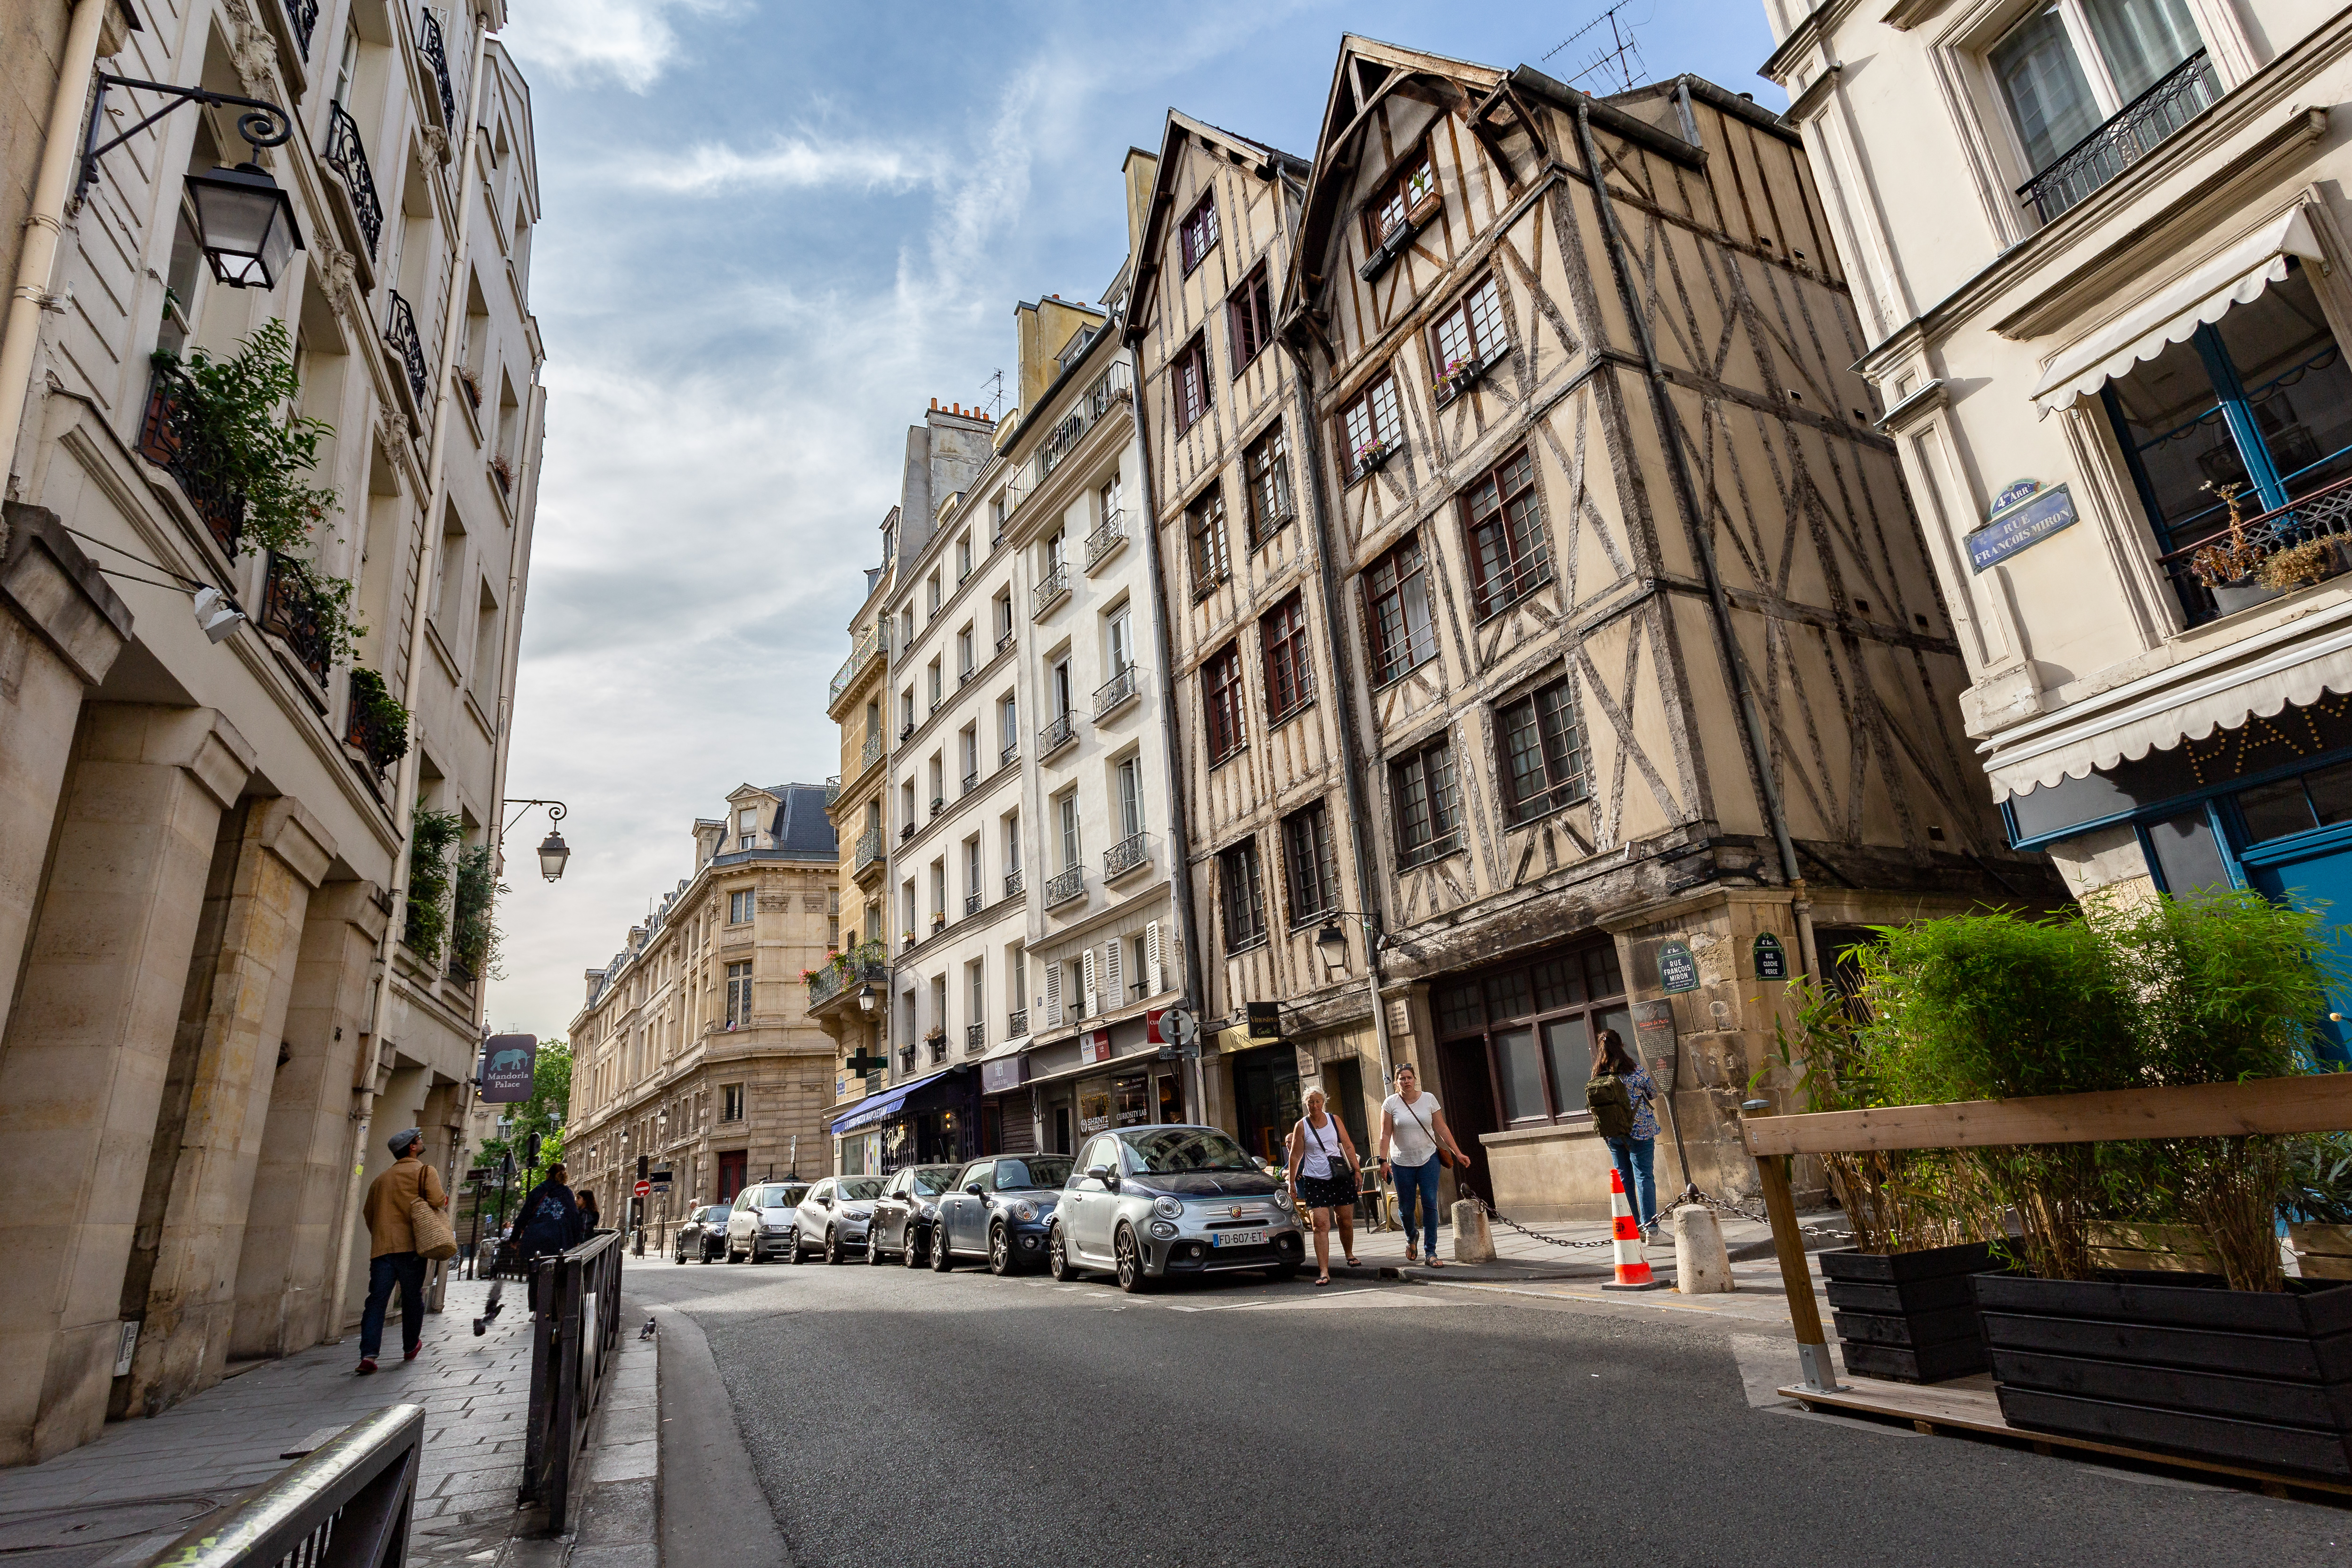 Le Marais Paris with Half-Timbered Houses